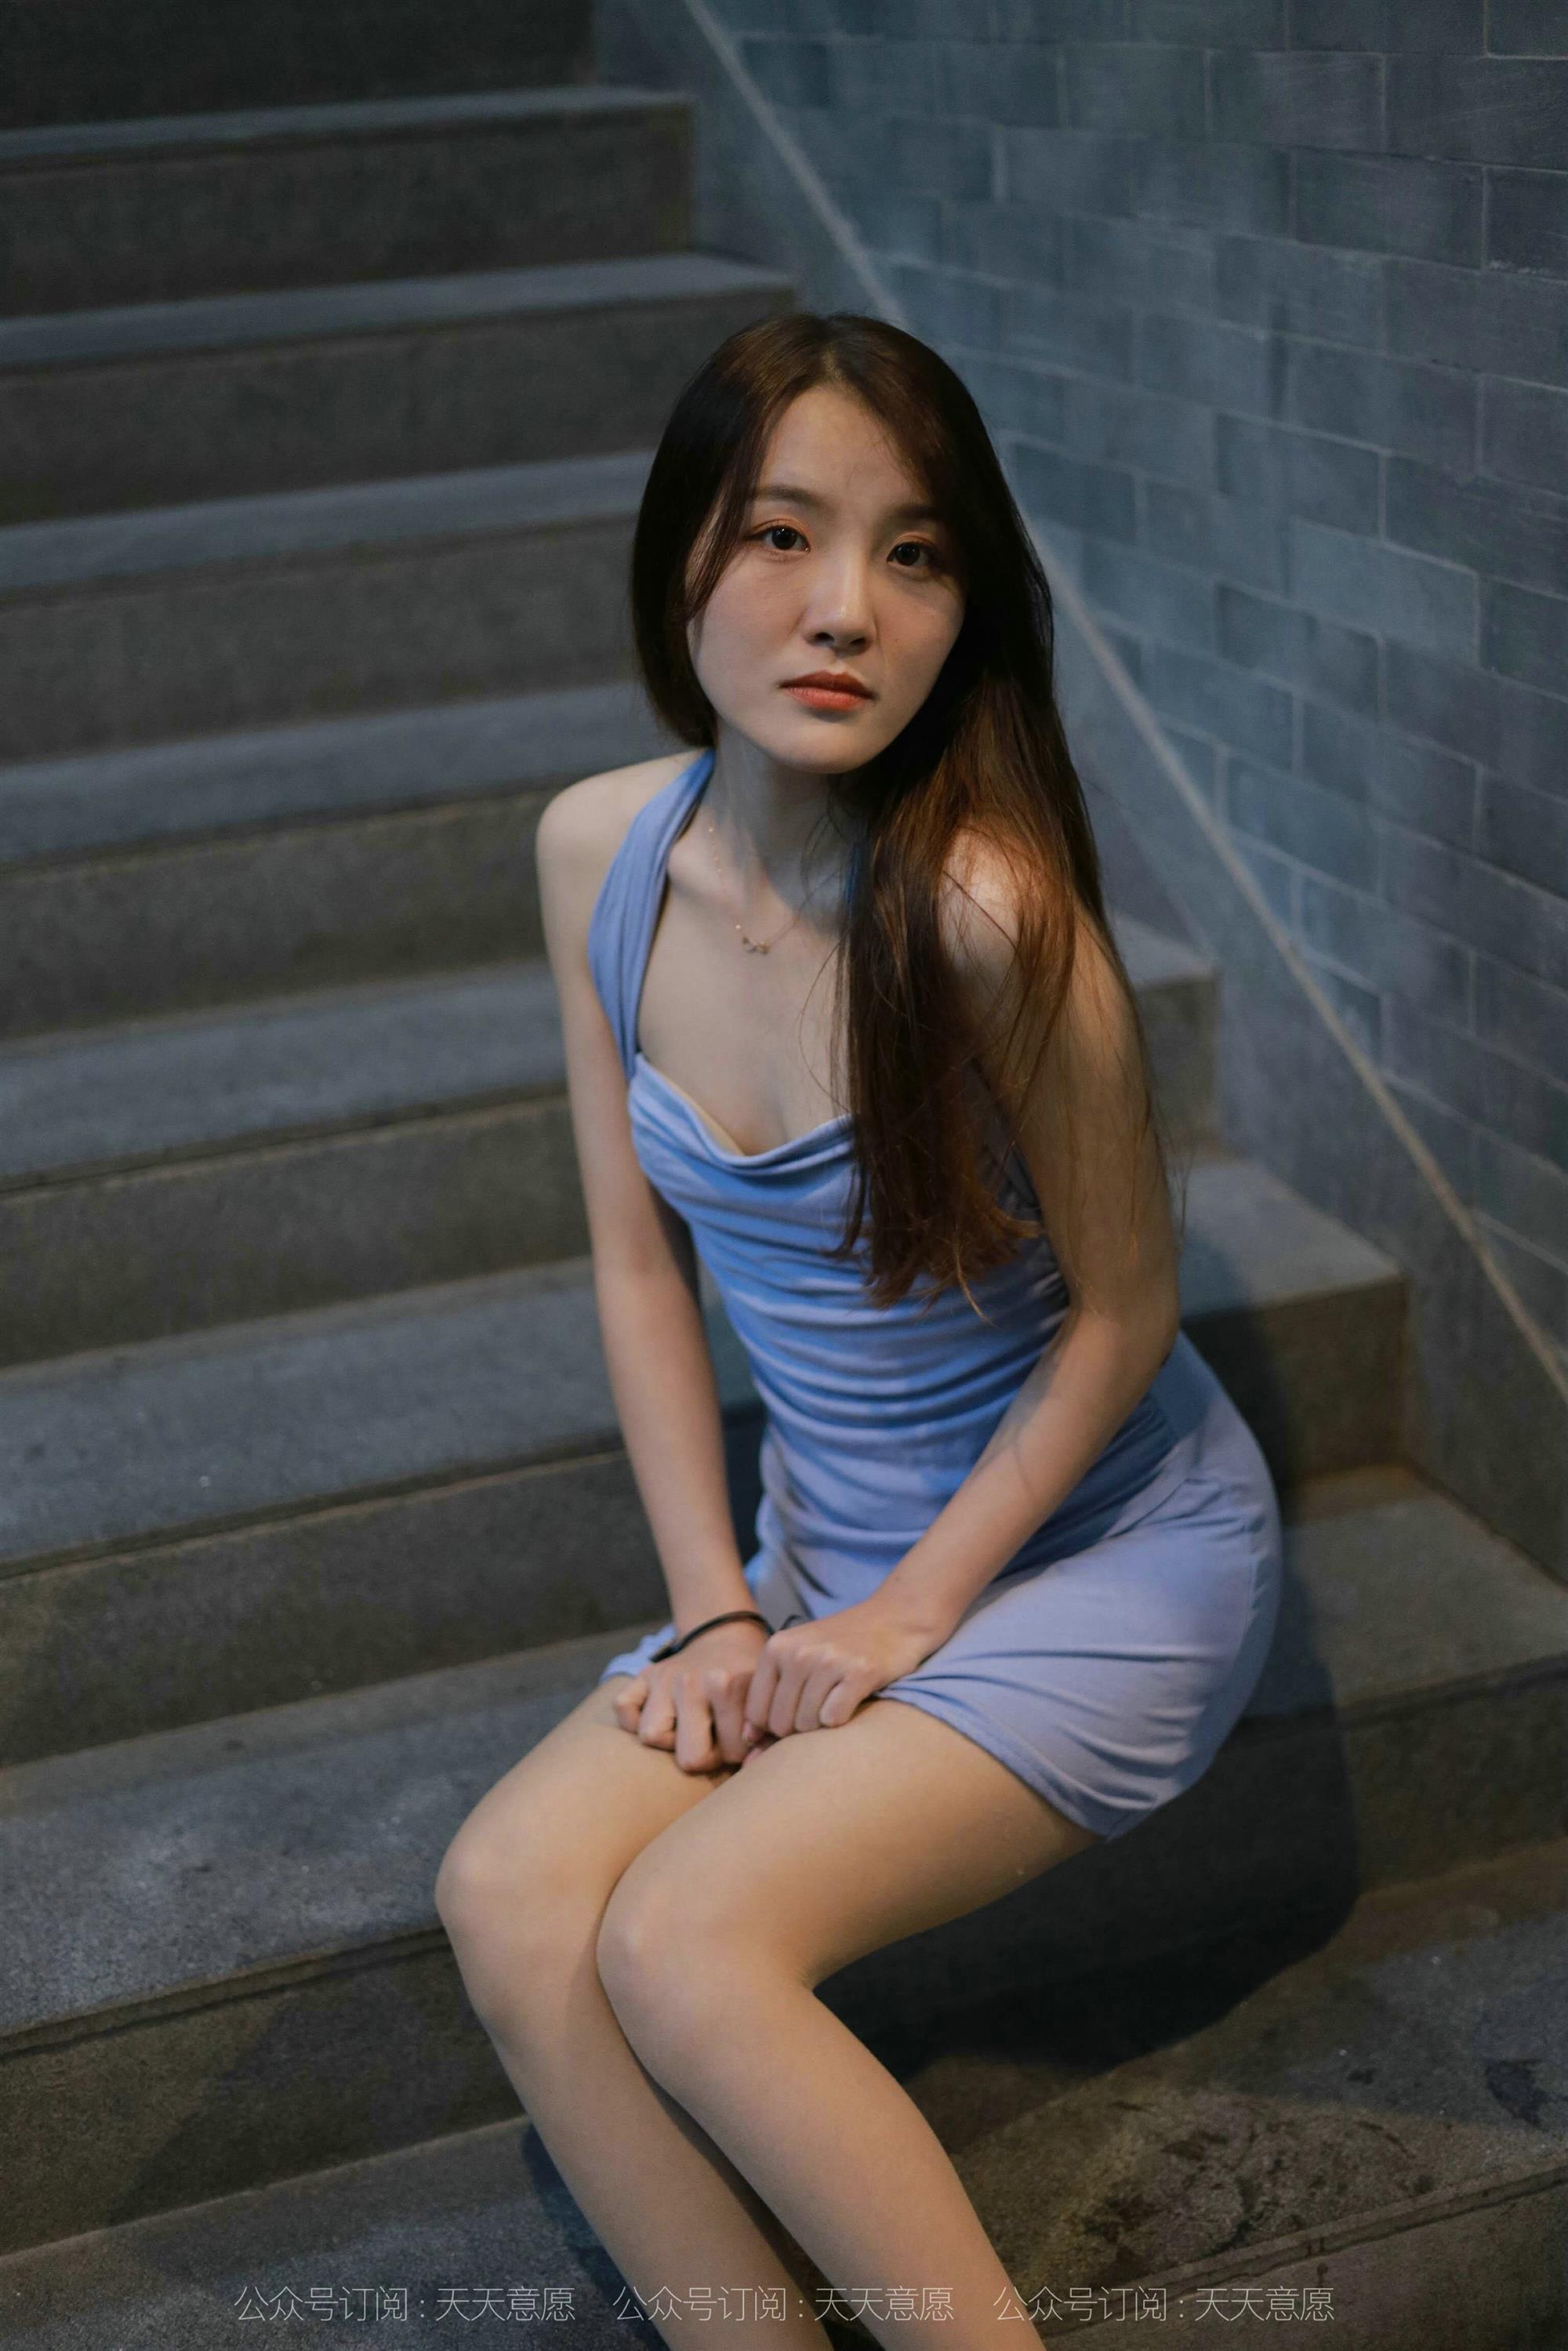 IESS 异思趣向 模特 婉苹 楼梯间的蓝衣美女 - 56.jpg